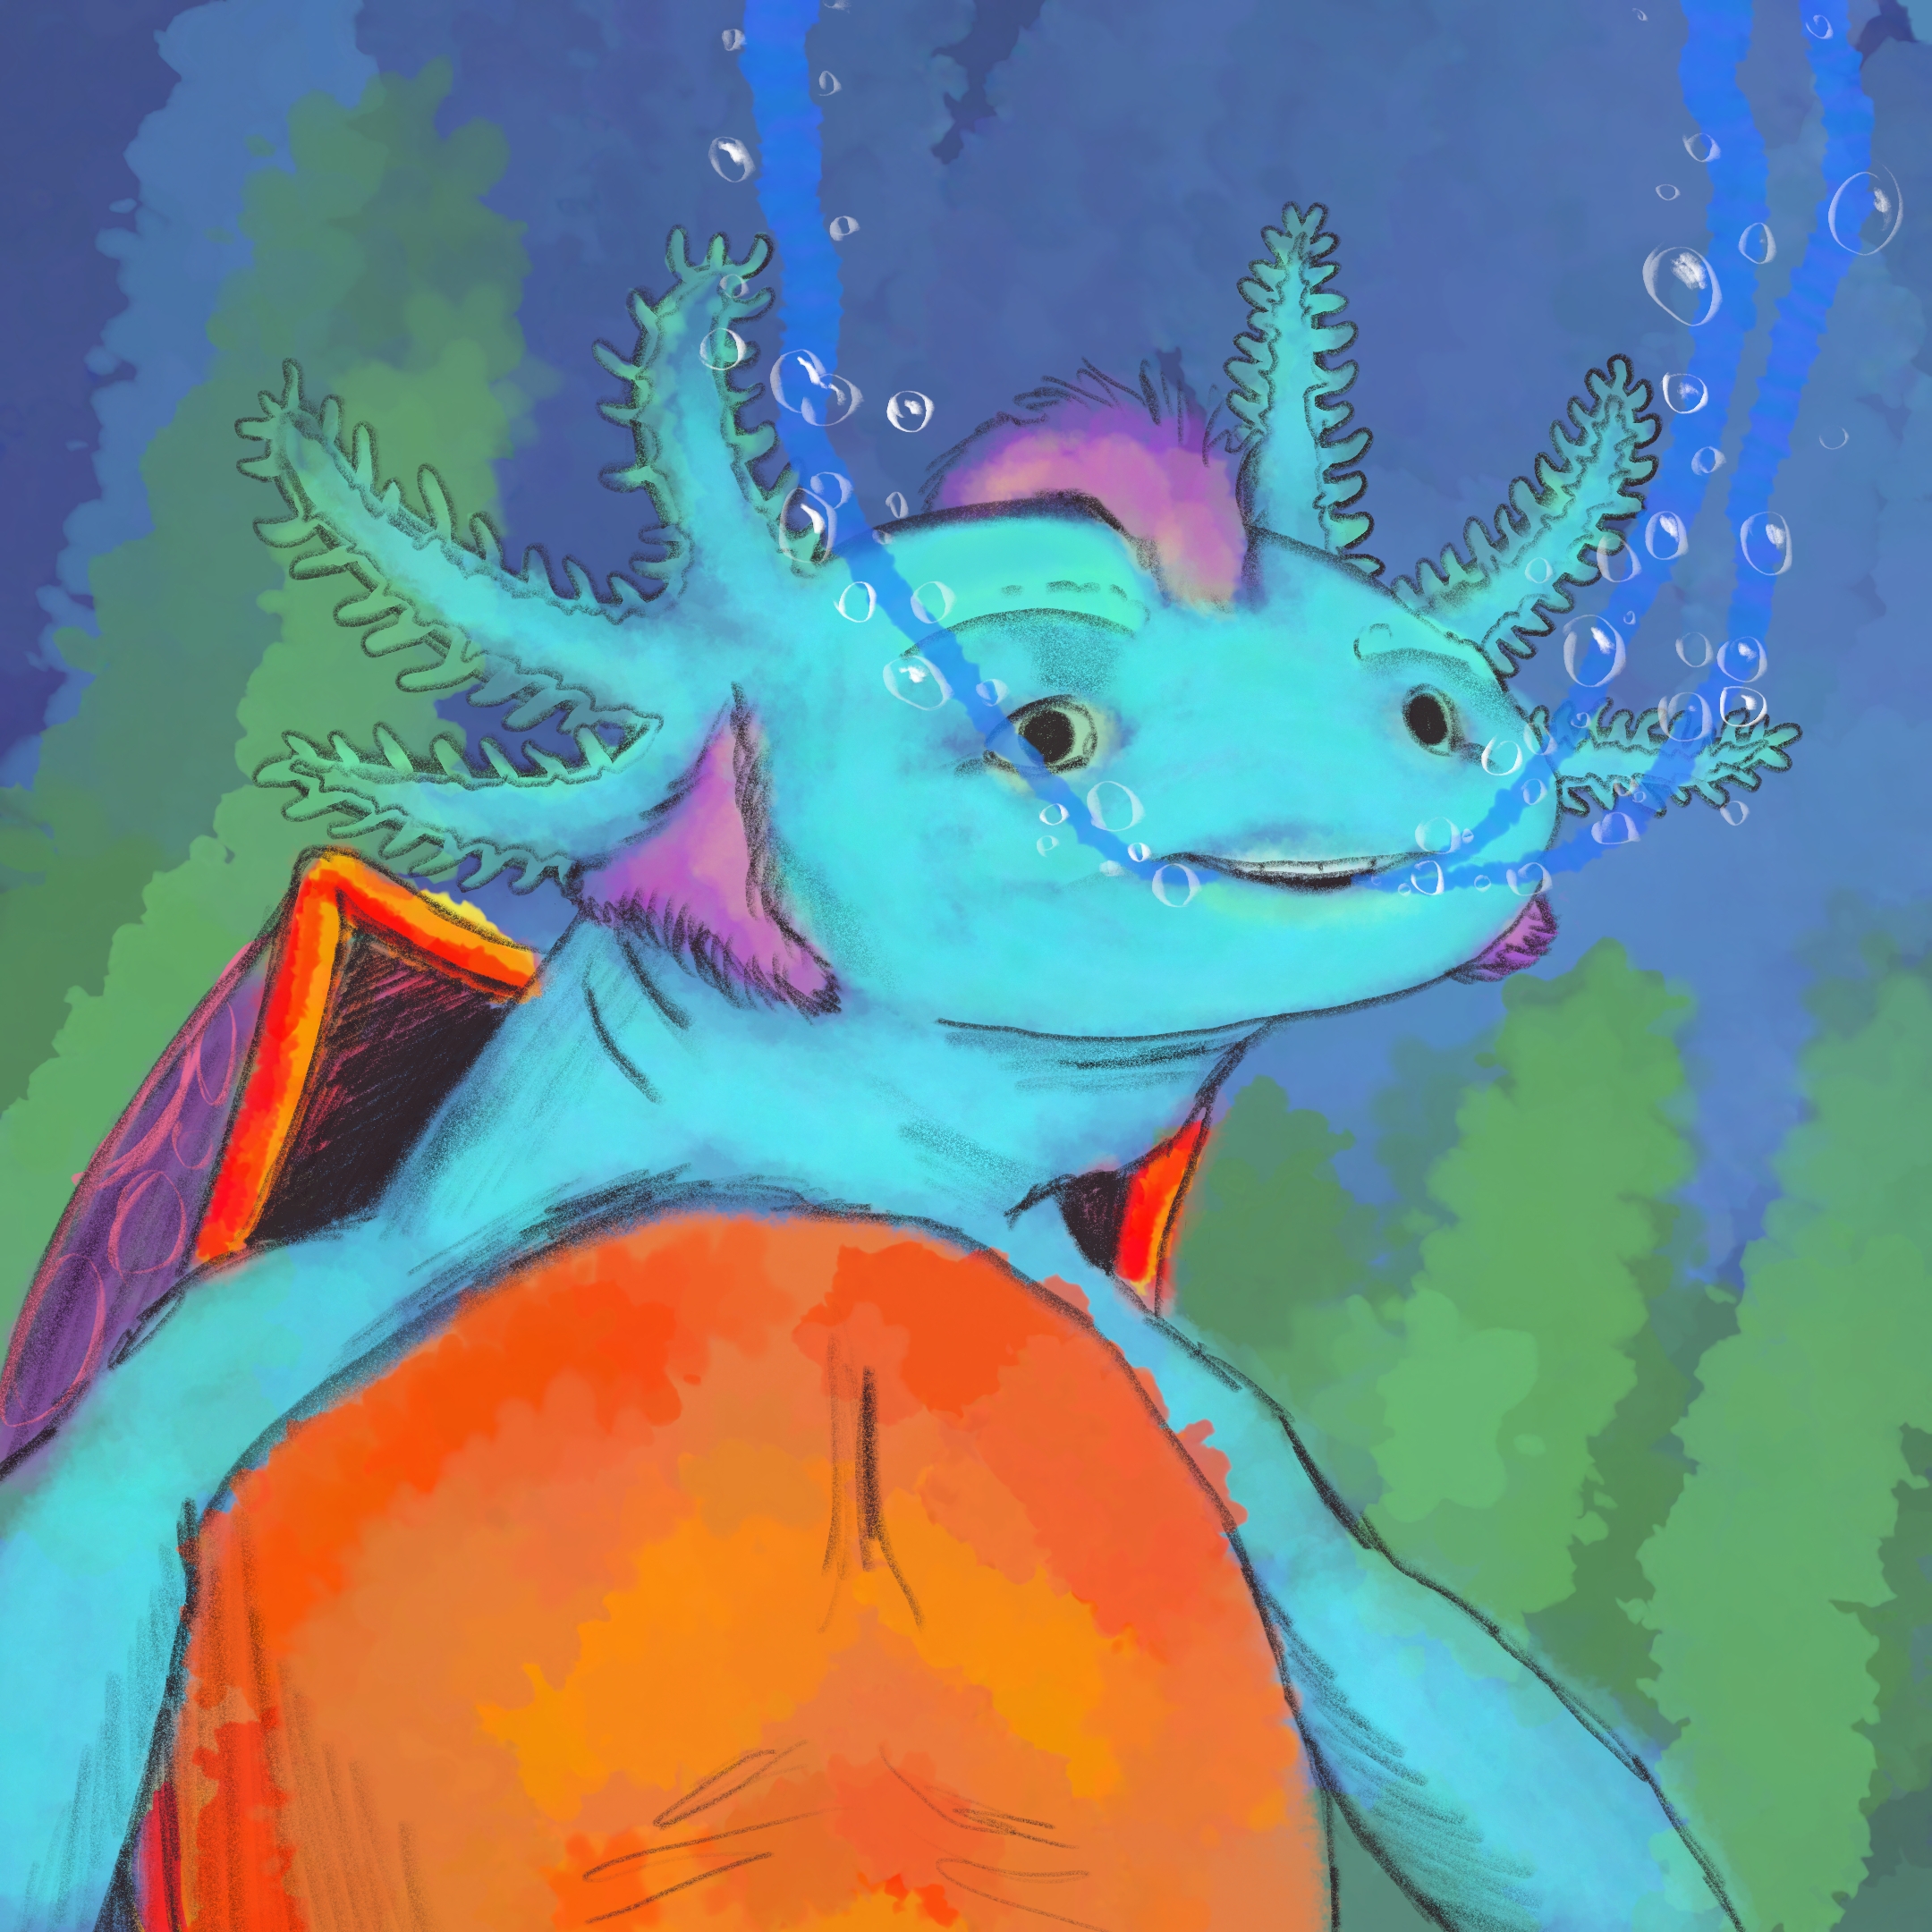 A axolotl/tortle hybrid character